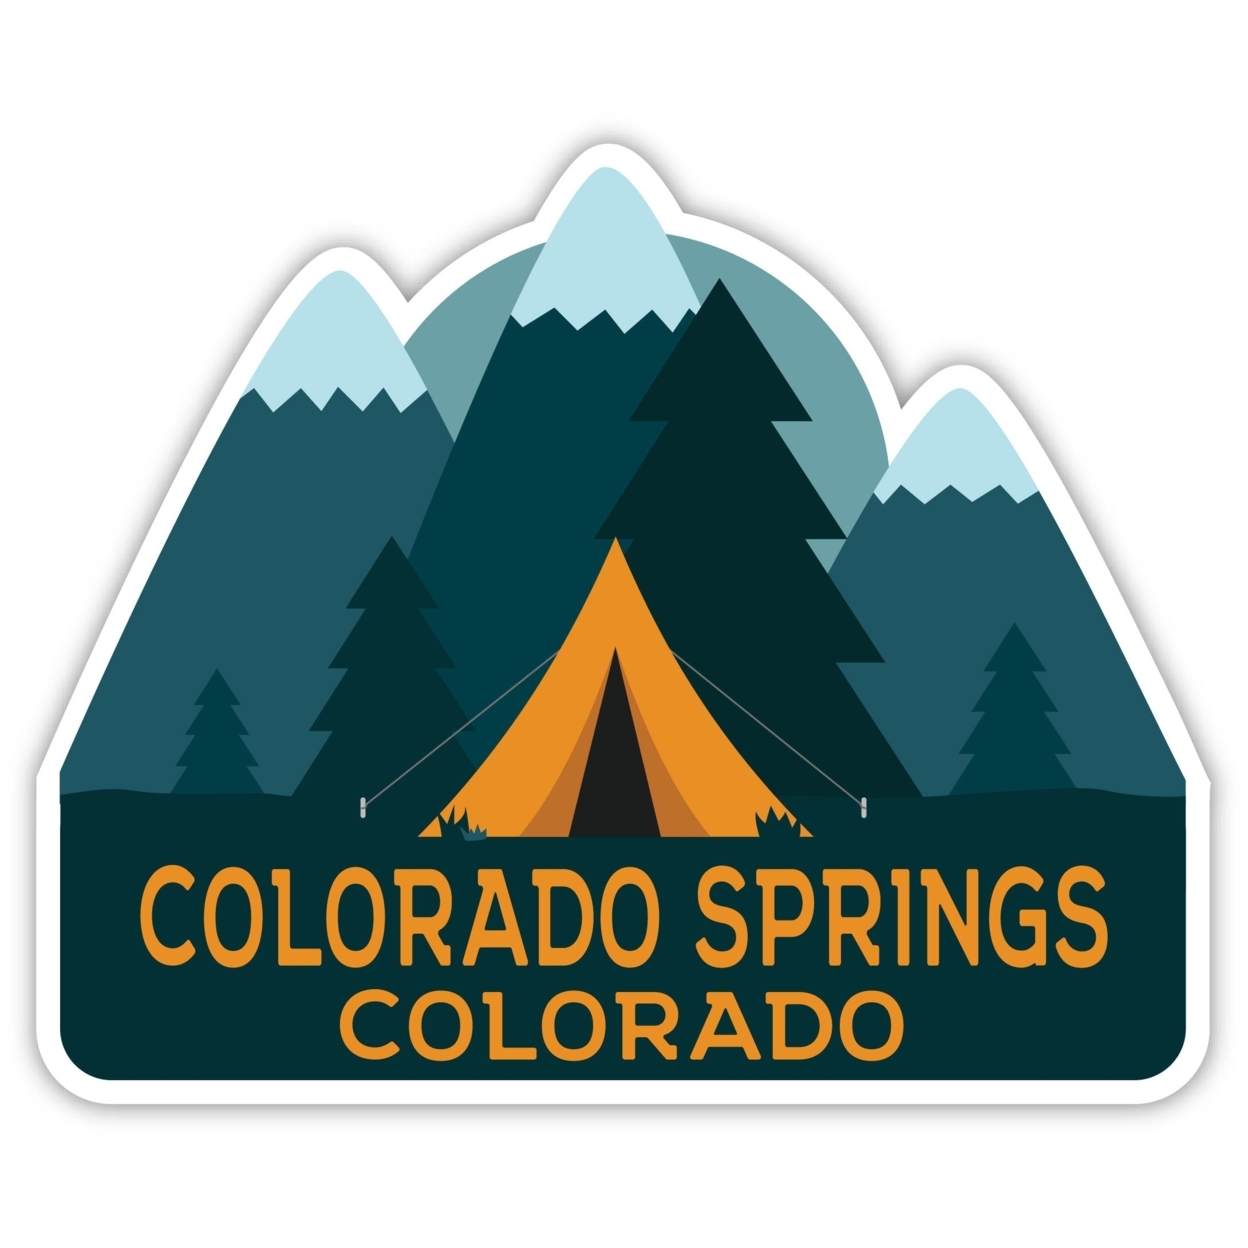 Colorado Springs Colorado Souvenir Decorative Stickers (Choose Theme And Size) - 4-Pack, 2-Inch, Bear